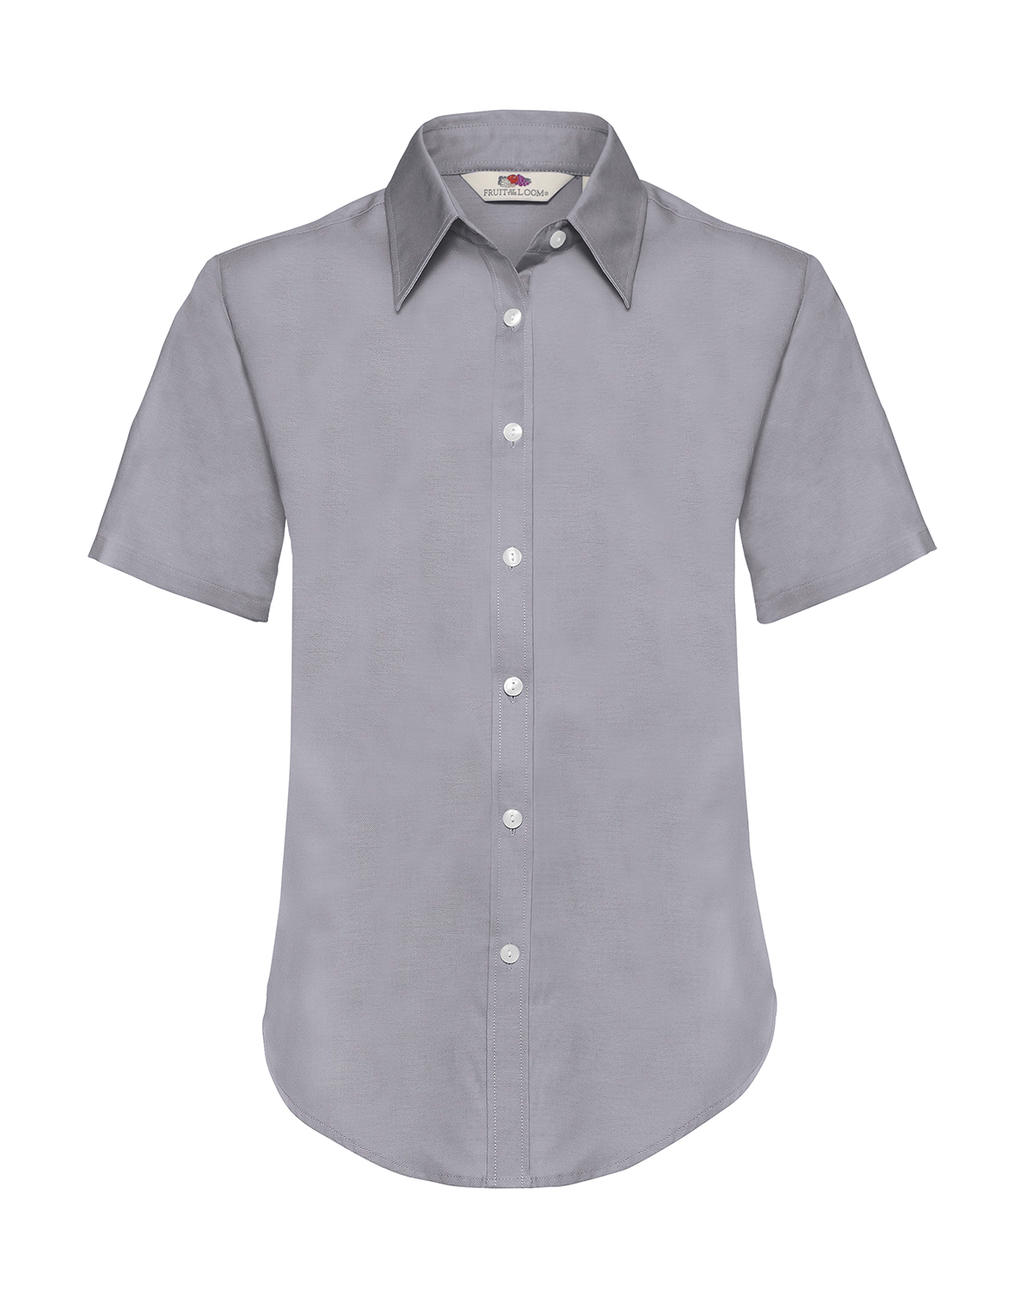  Ladies Oxford Shirt in Farbe Oxford Grey